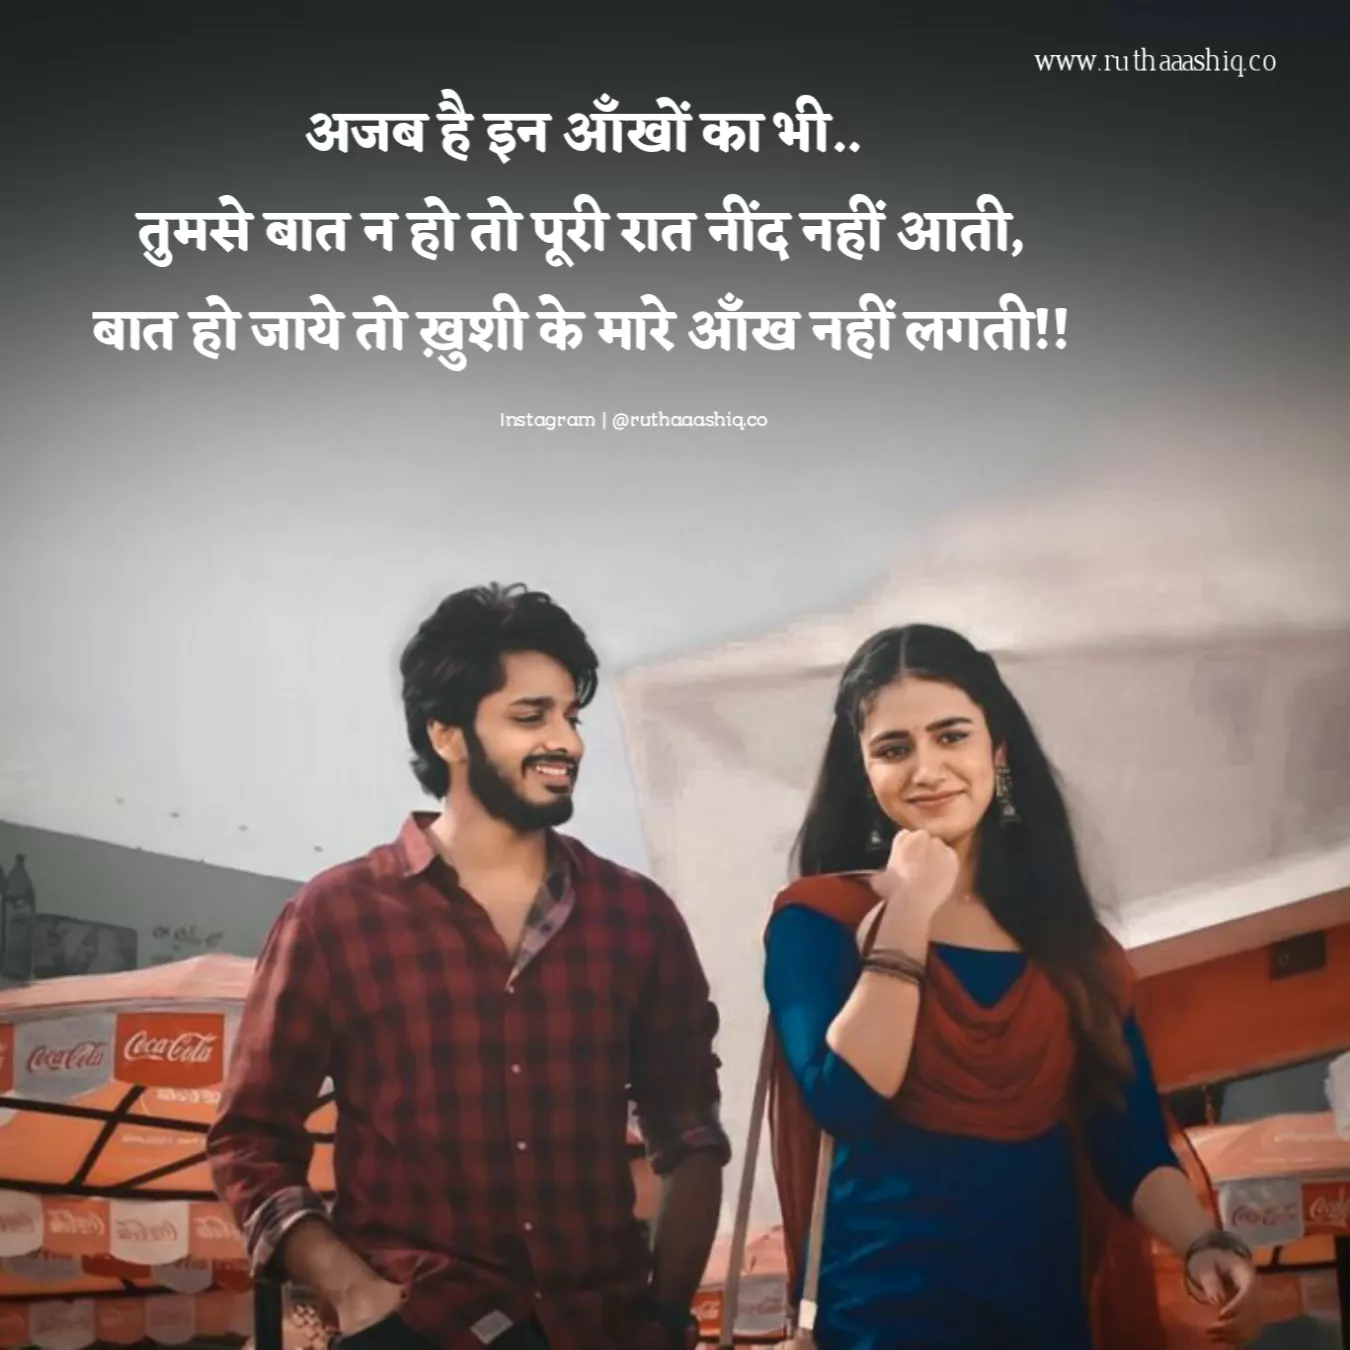 Shayari On Love In Hindi With Images